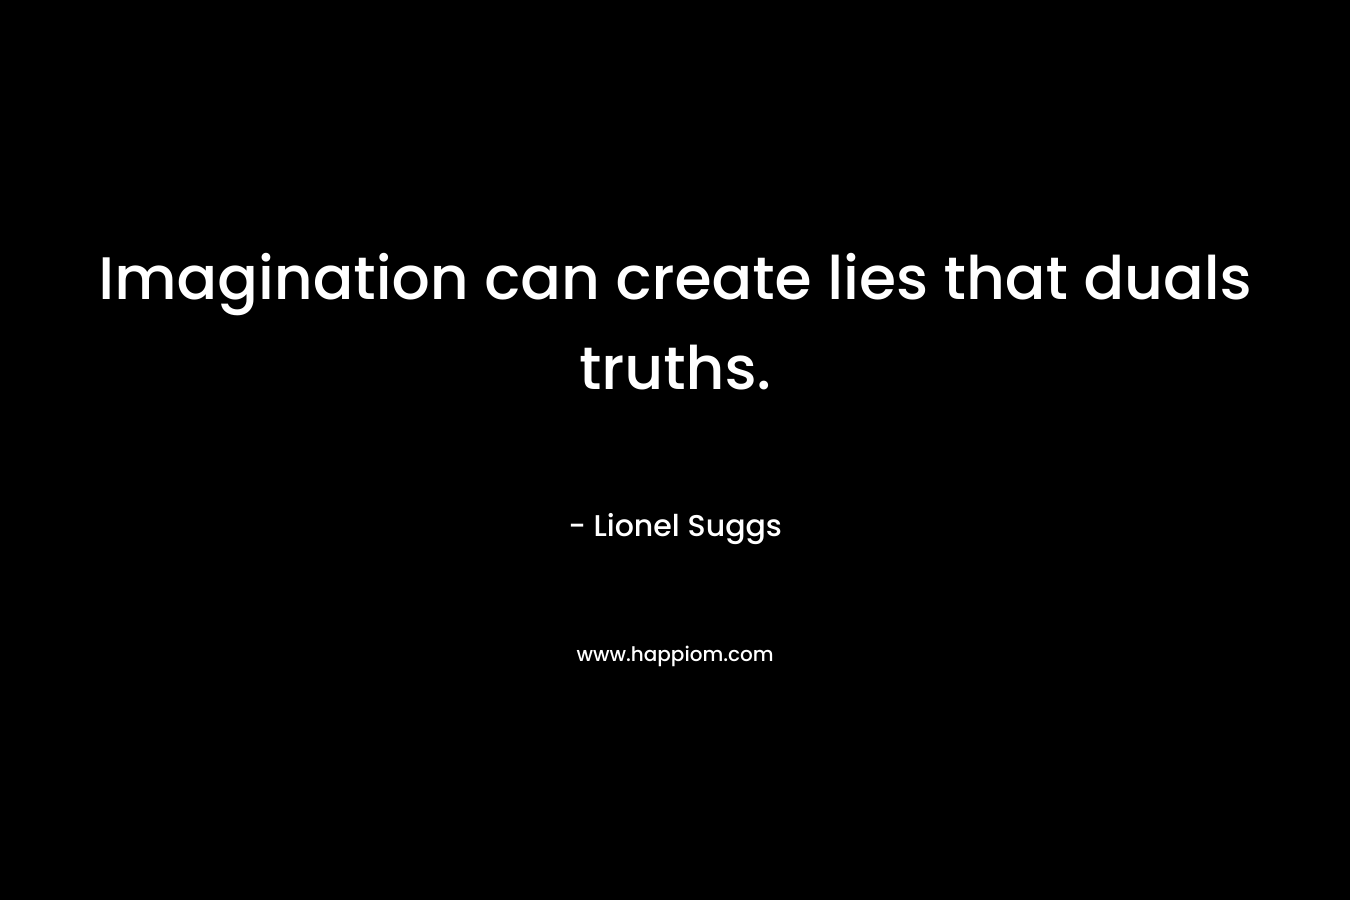 Imagination can create lies that duals truths.